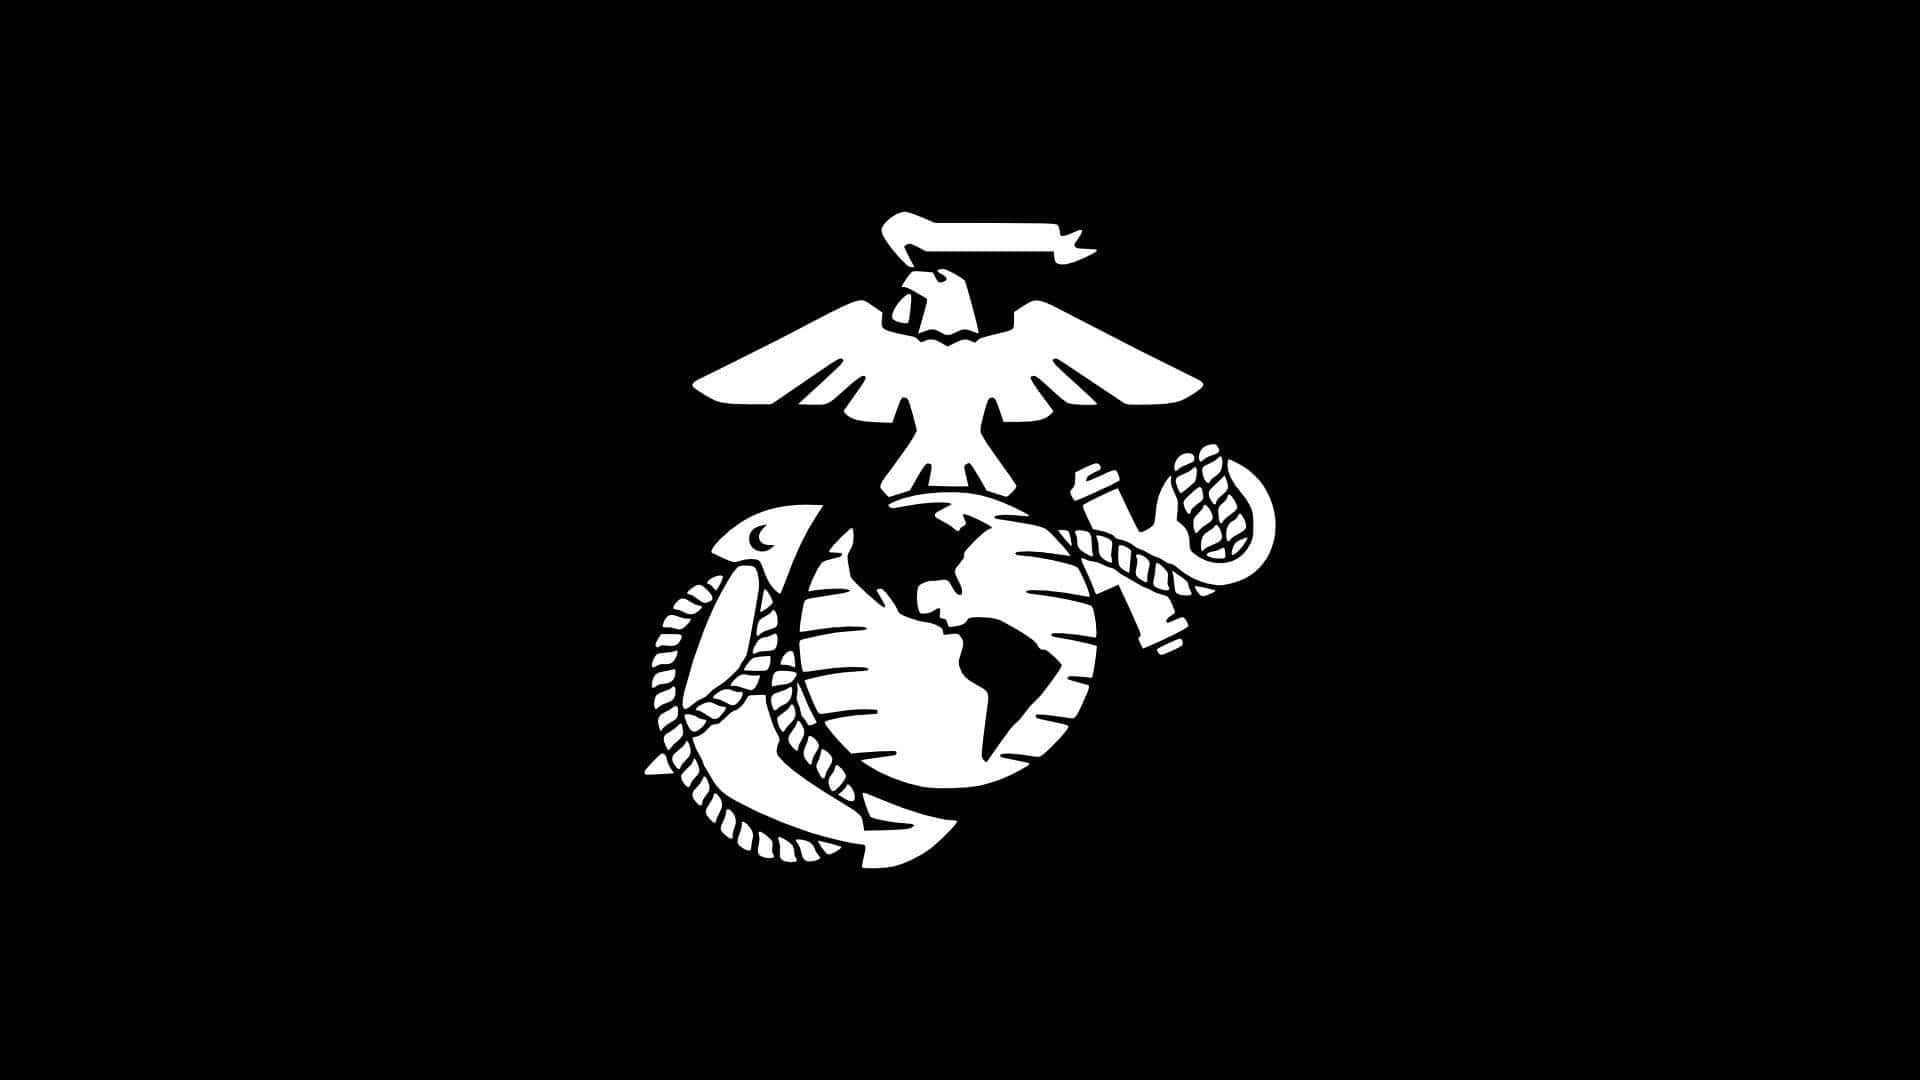 Det Officielle Logo for United States Marine Corps Wallpaper